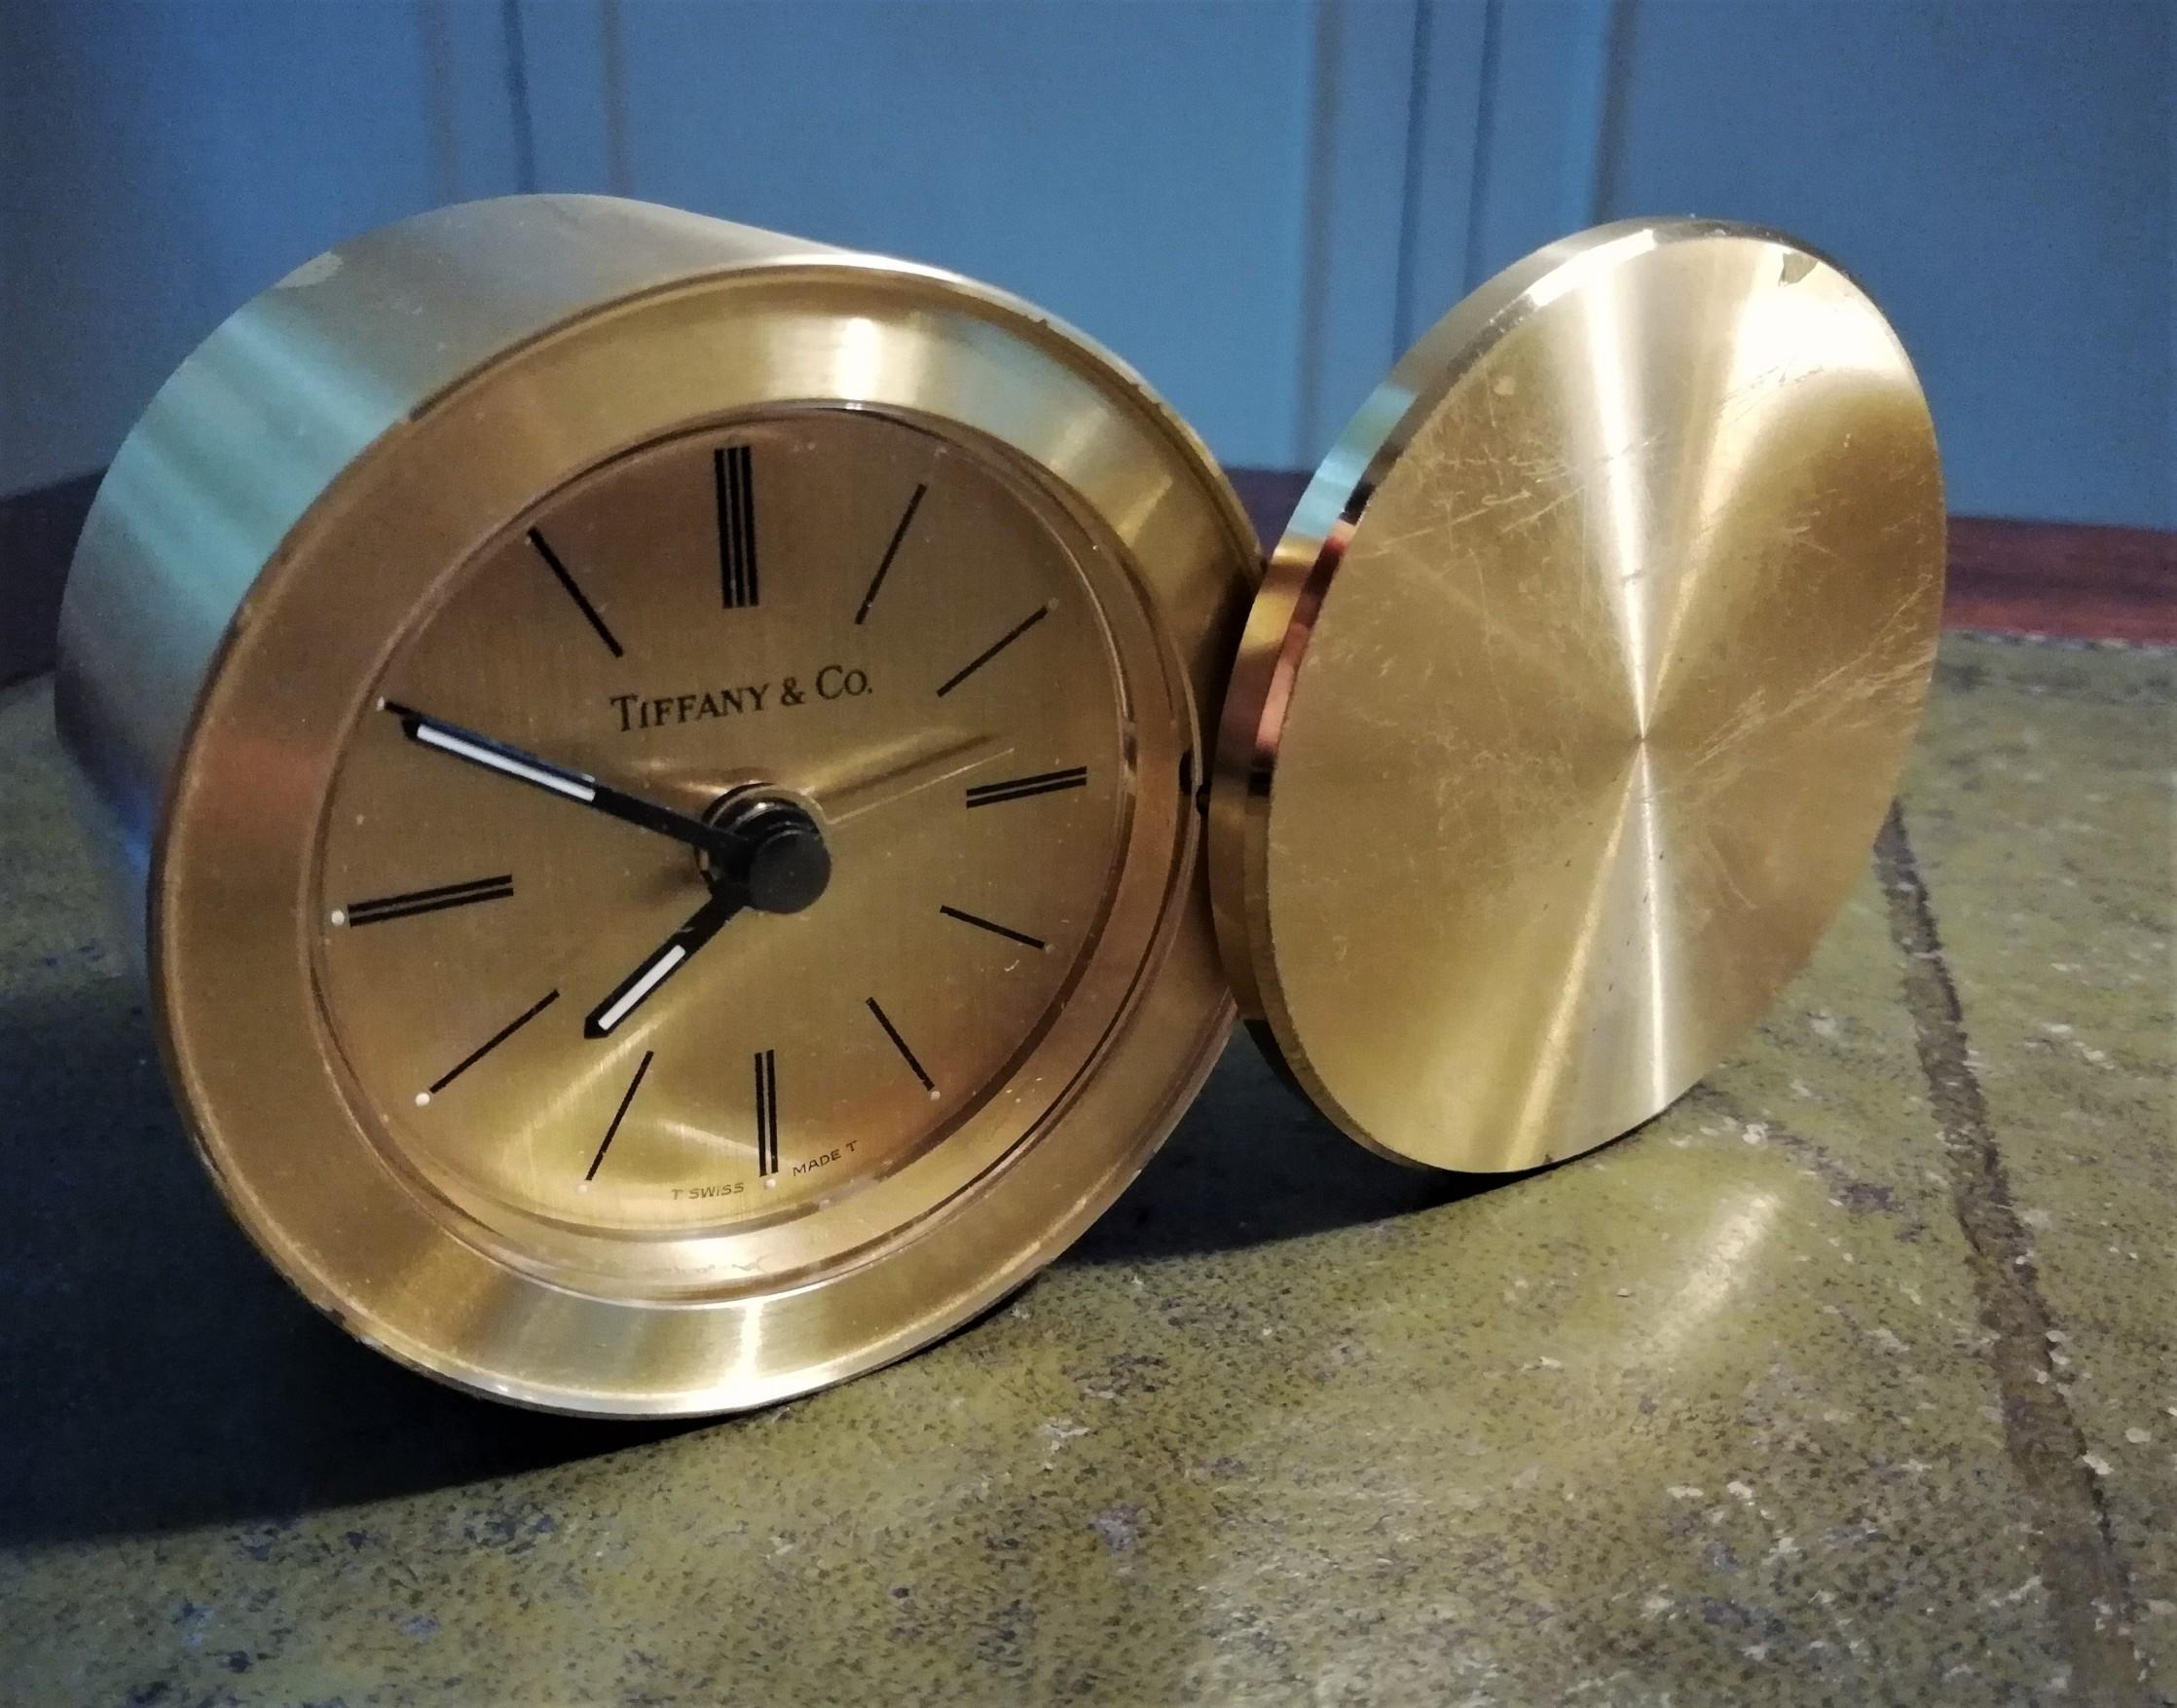 Vintage Tiffany & Co Travel Desk Alarm Clock in W1